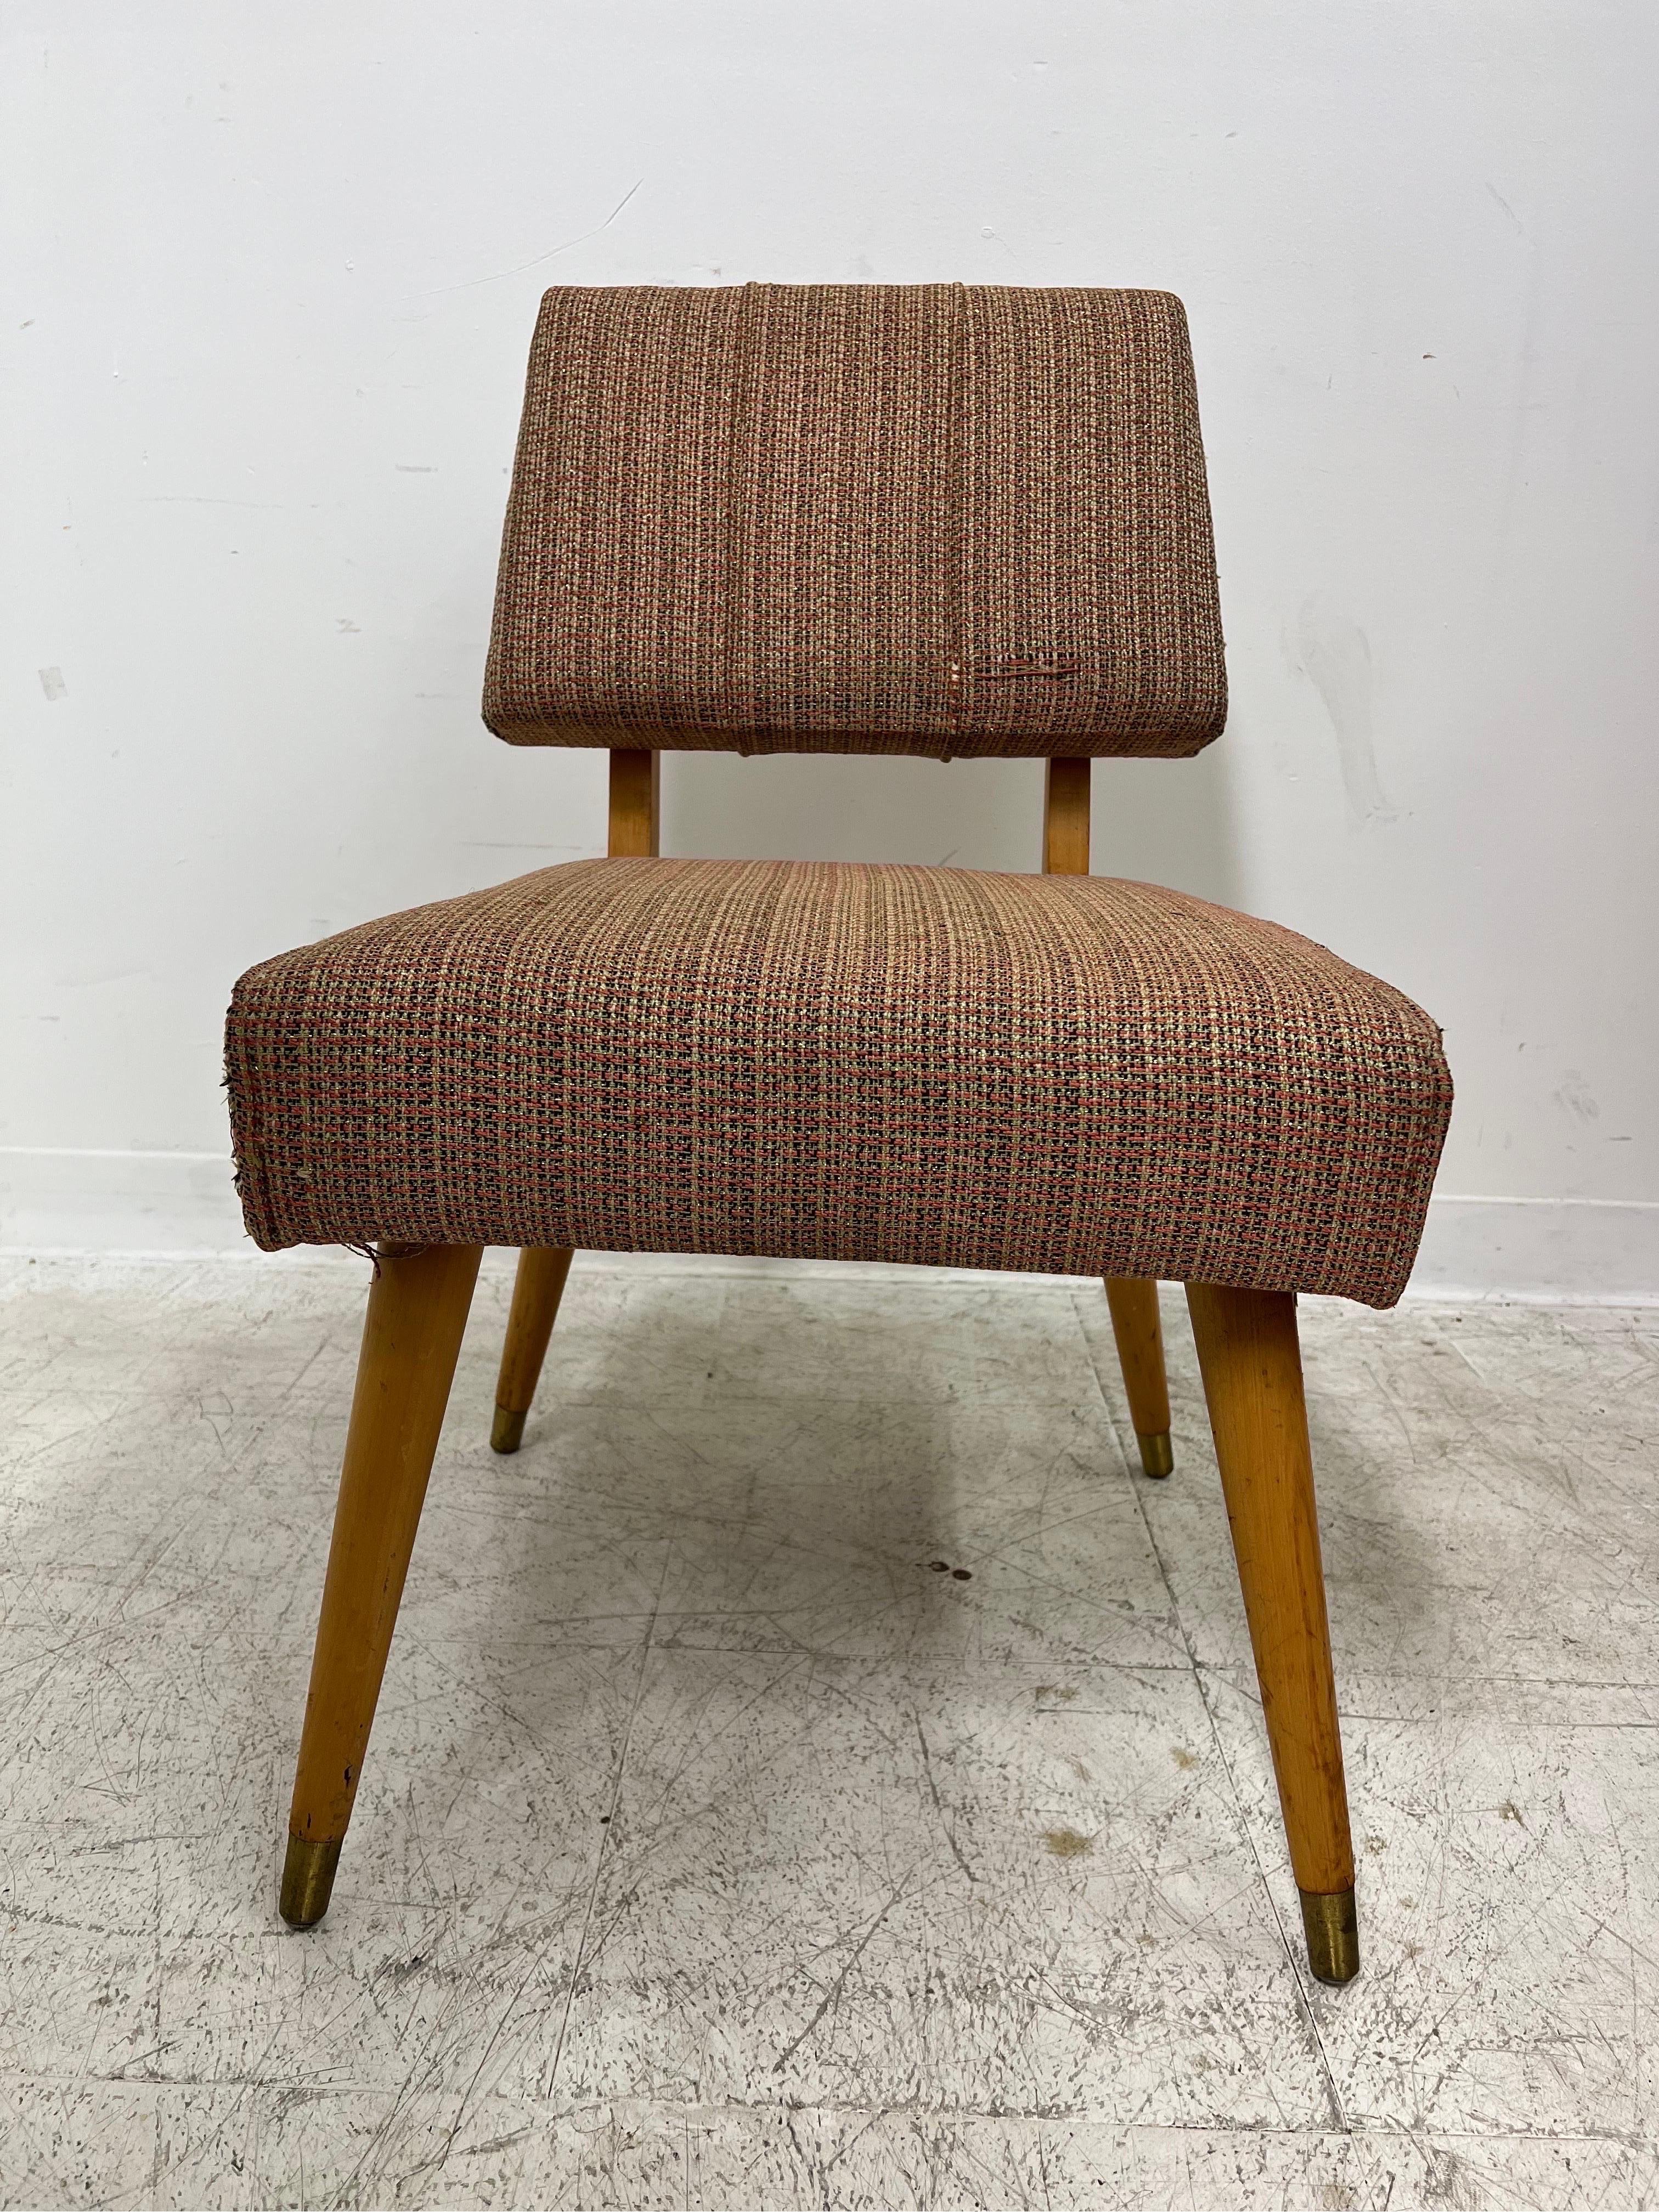 Vintage Mid-Century Modern chair

Dimensions. 18 W ; 21 1/2 D ; 30 H.